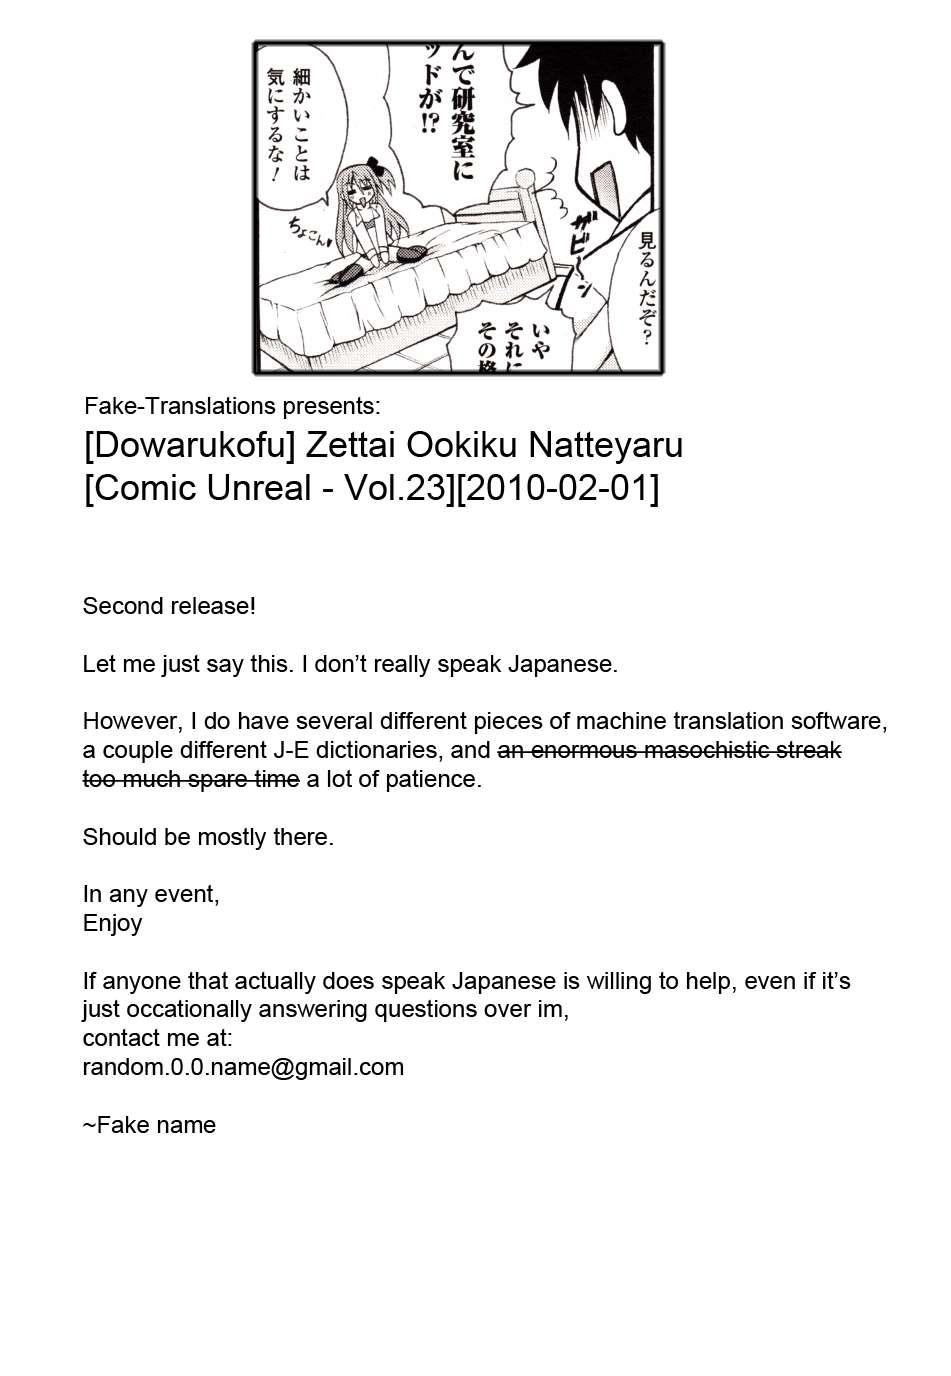 Dowarukofu - Zettai Ookiku Natteyaru 1